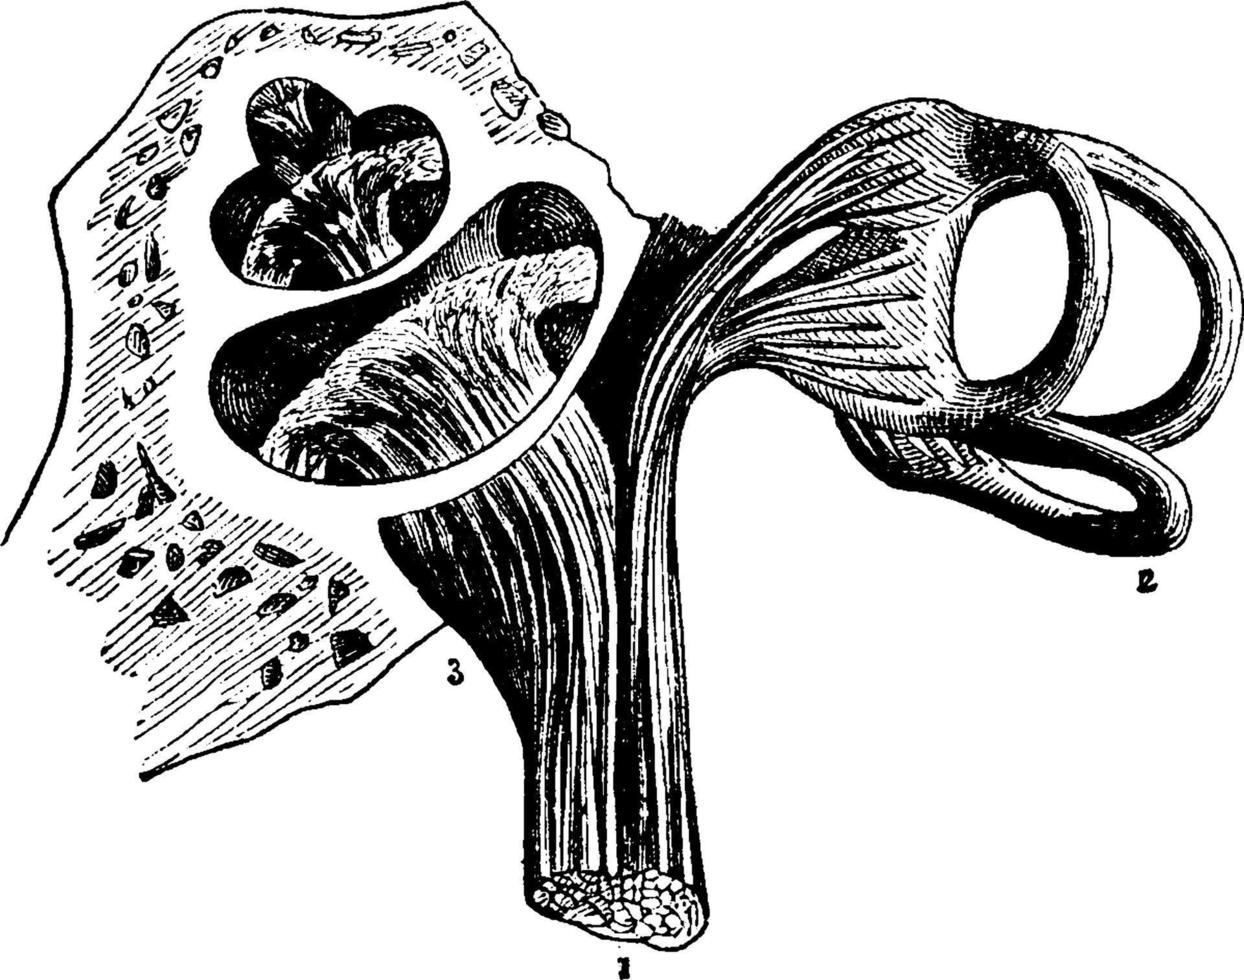 nervio auditivo, ilustración antigua. vector